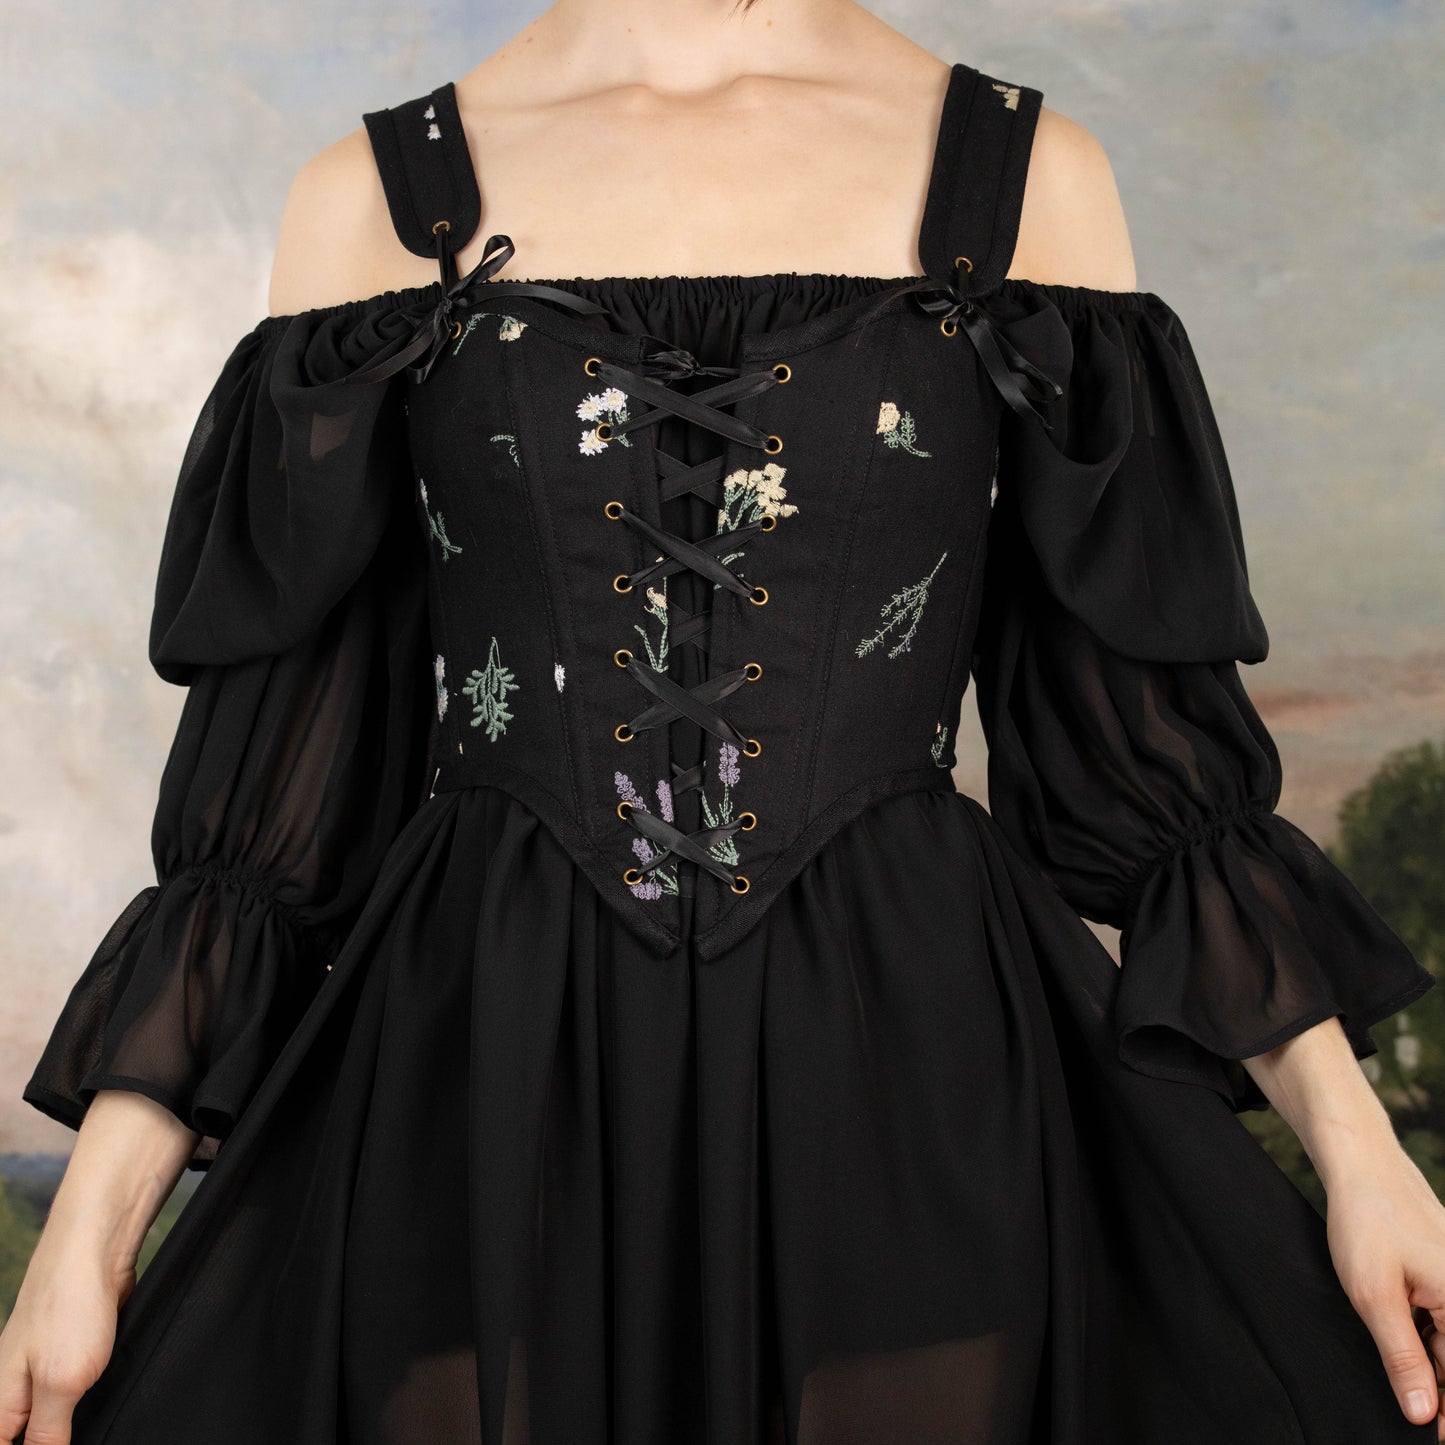 close up view of black chiffon nightgown